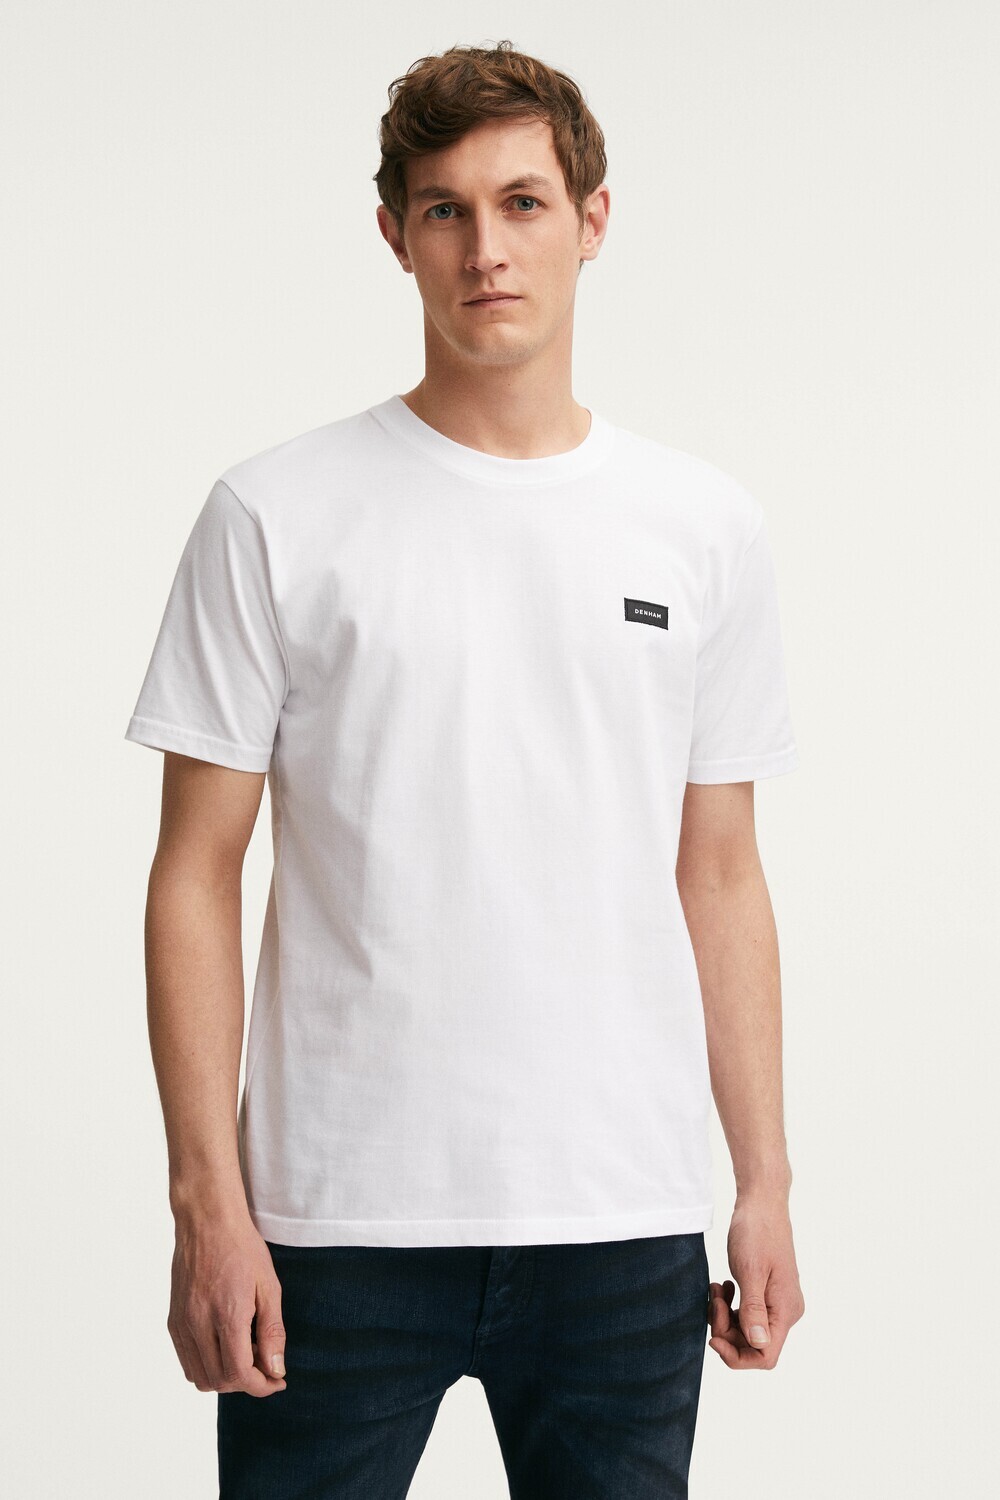 Denham Roger T-Shirt